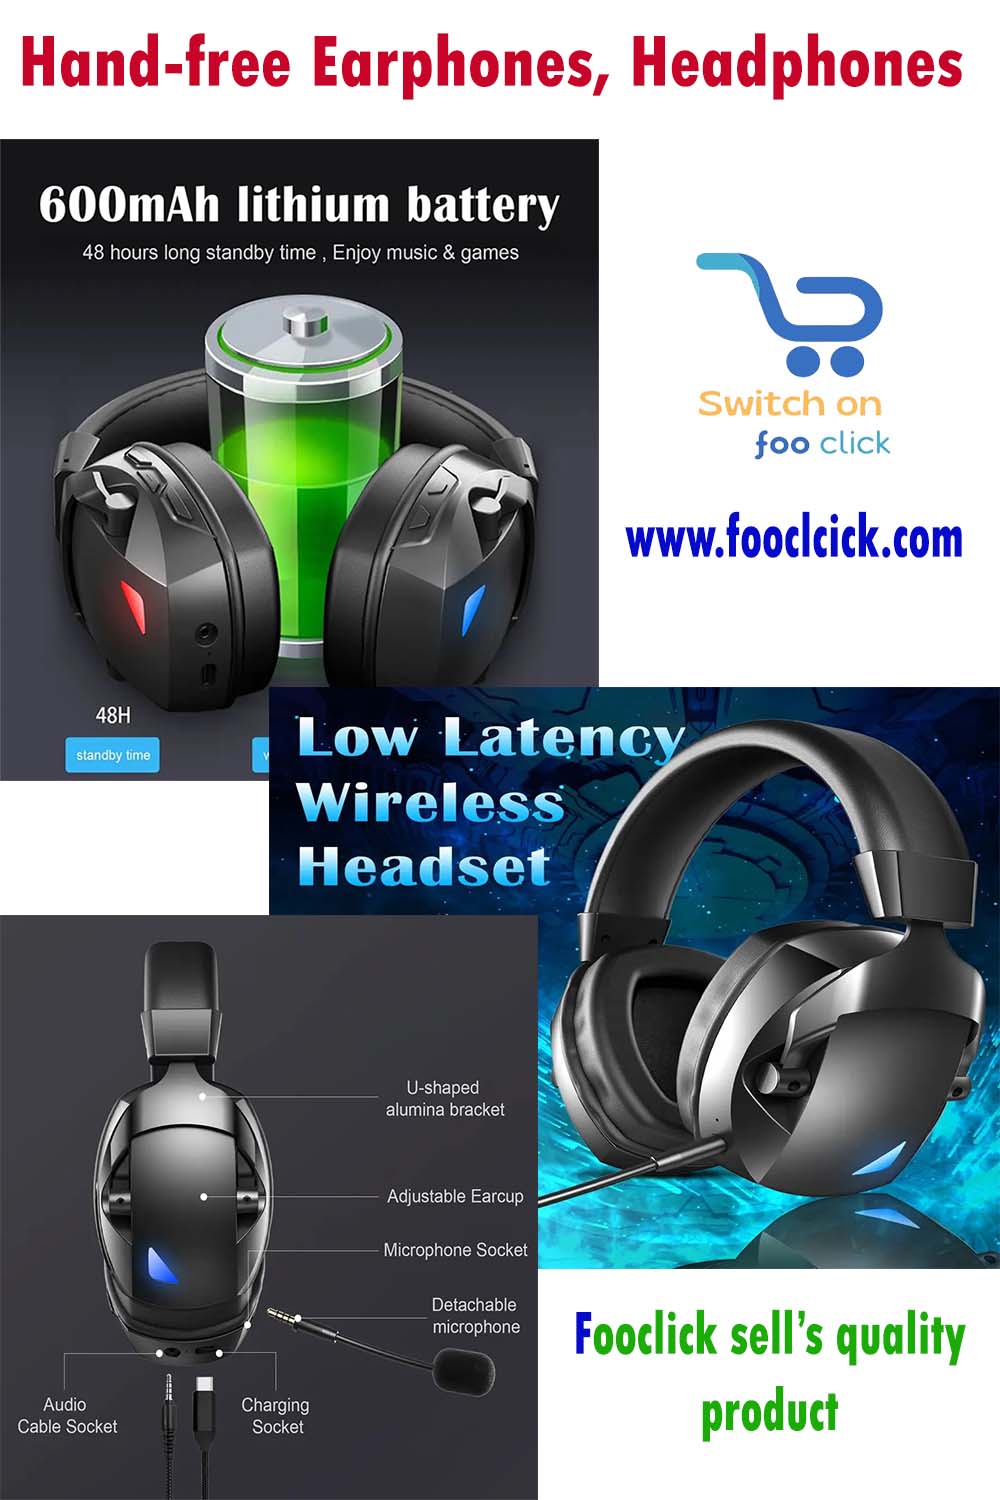 Hand-free Earphones, Headphones Or Earbud For PC Bluetooth Gaming